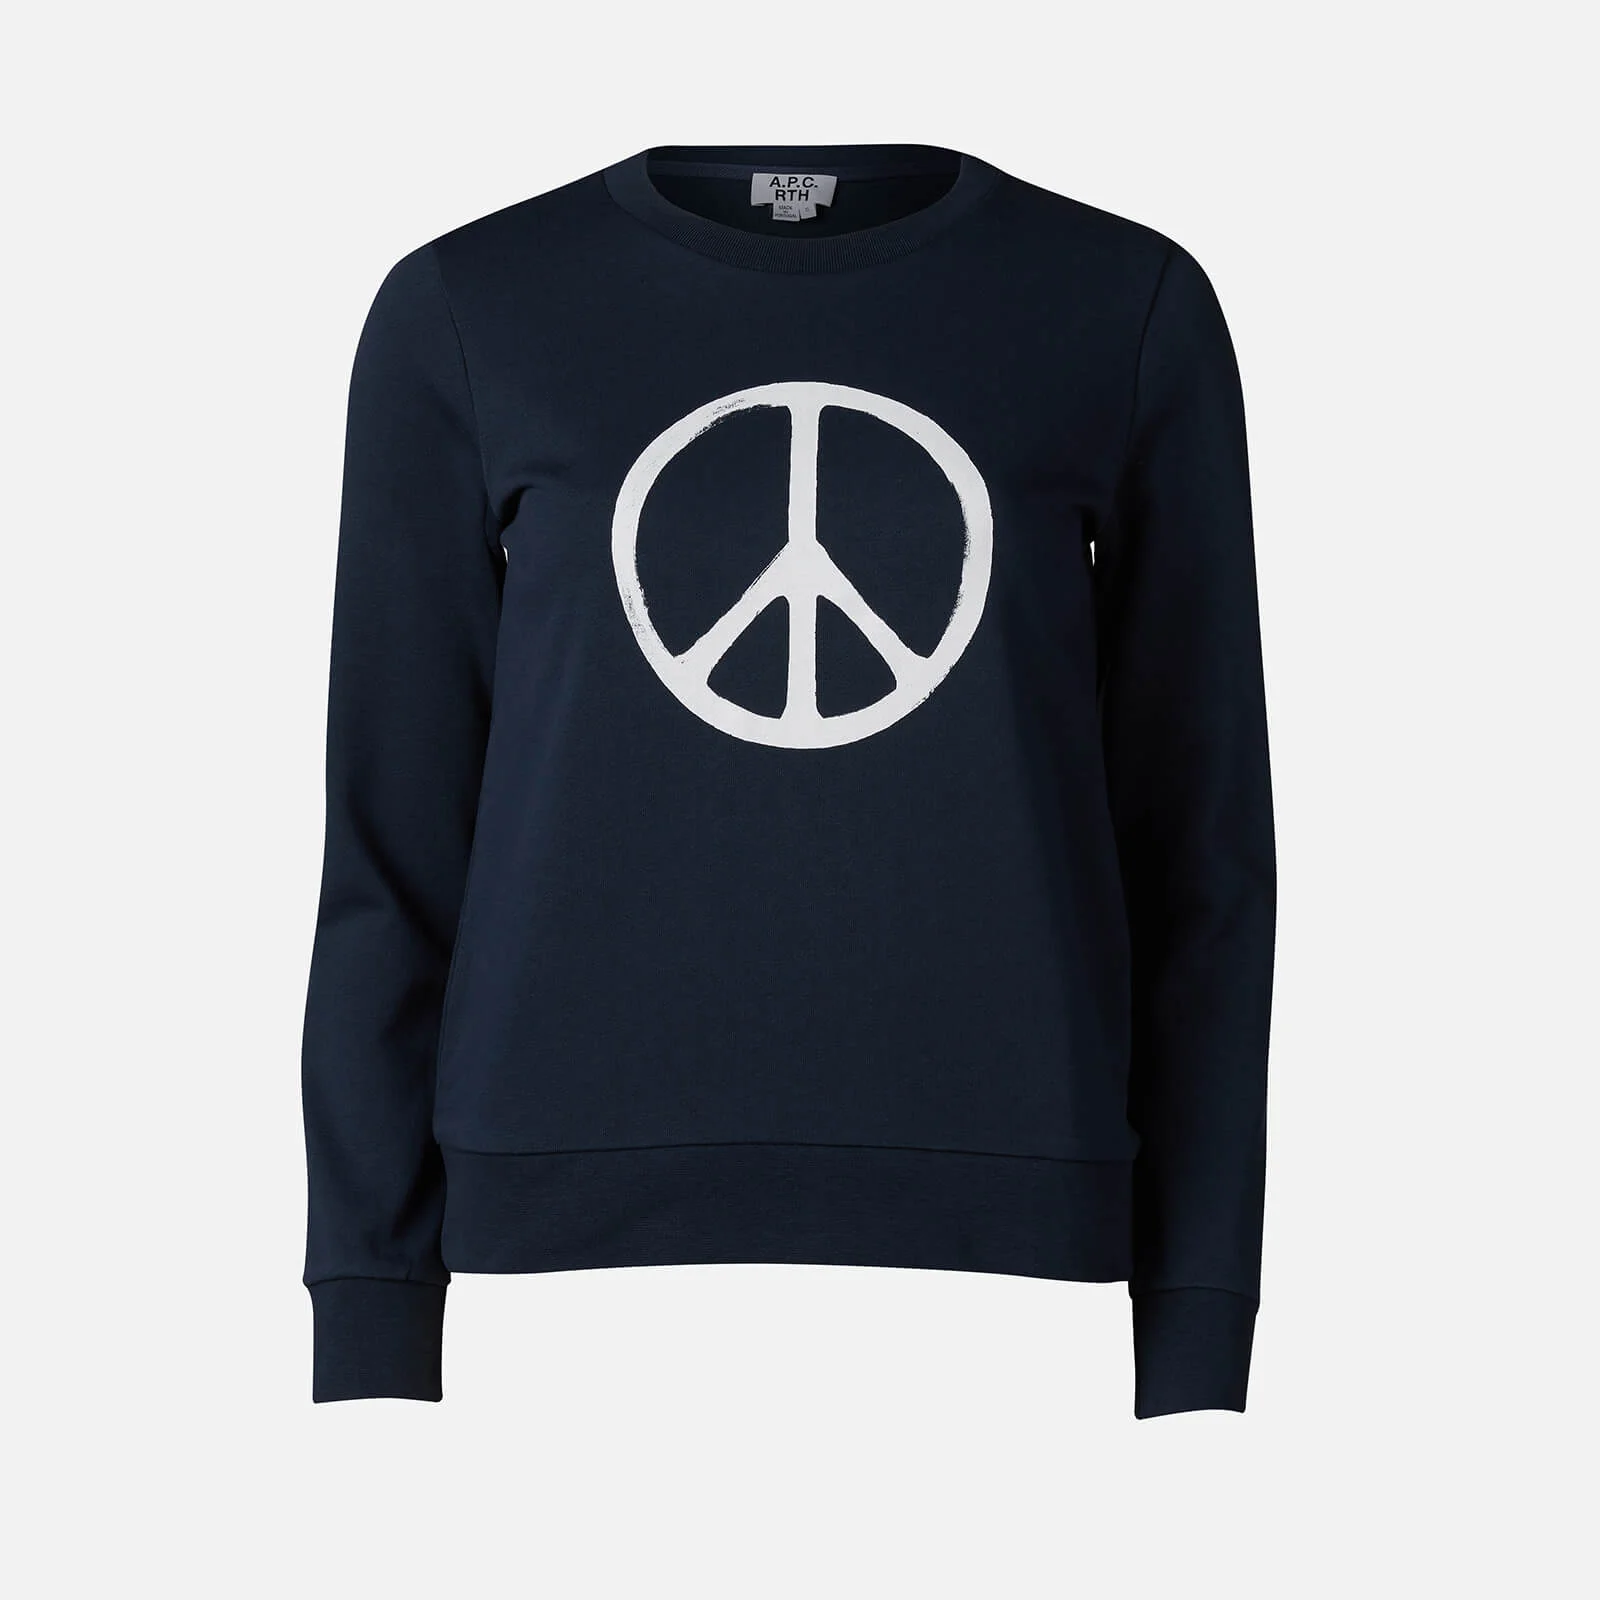 A.P.C. Women's Peace Sweatshirt - Dark Navy Image 1